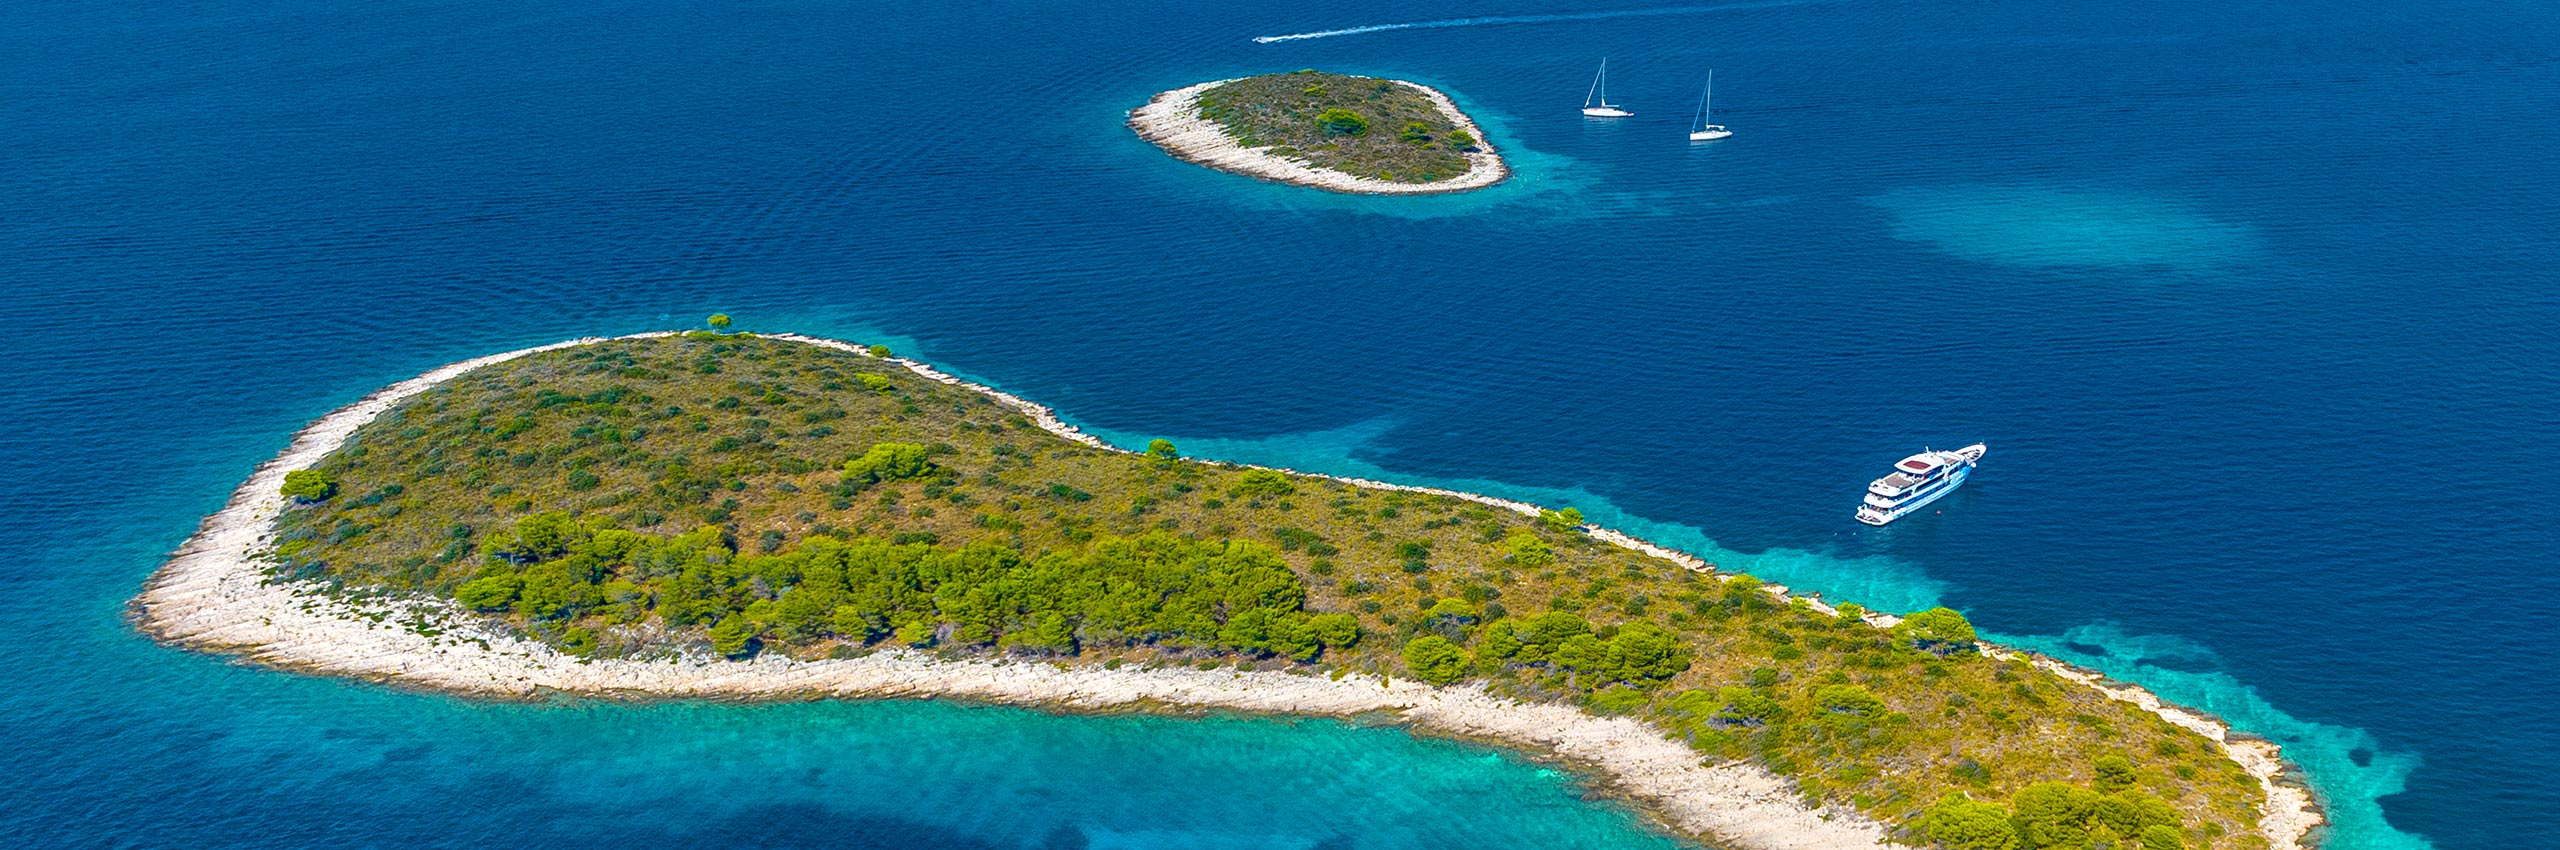 SIM-1360645 | Croatia/Dalmatia, Hvar island, Pakleni islands | © Giorgio Filippini/4Corners